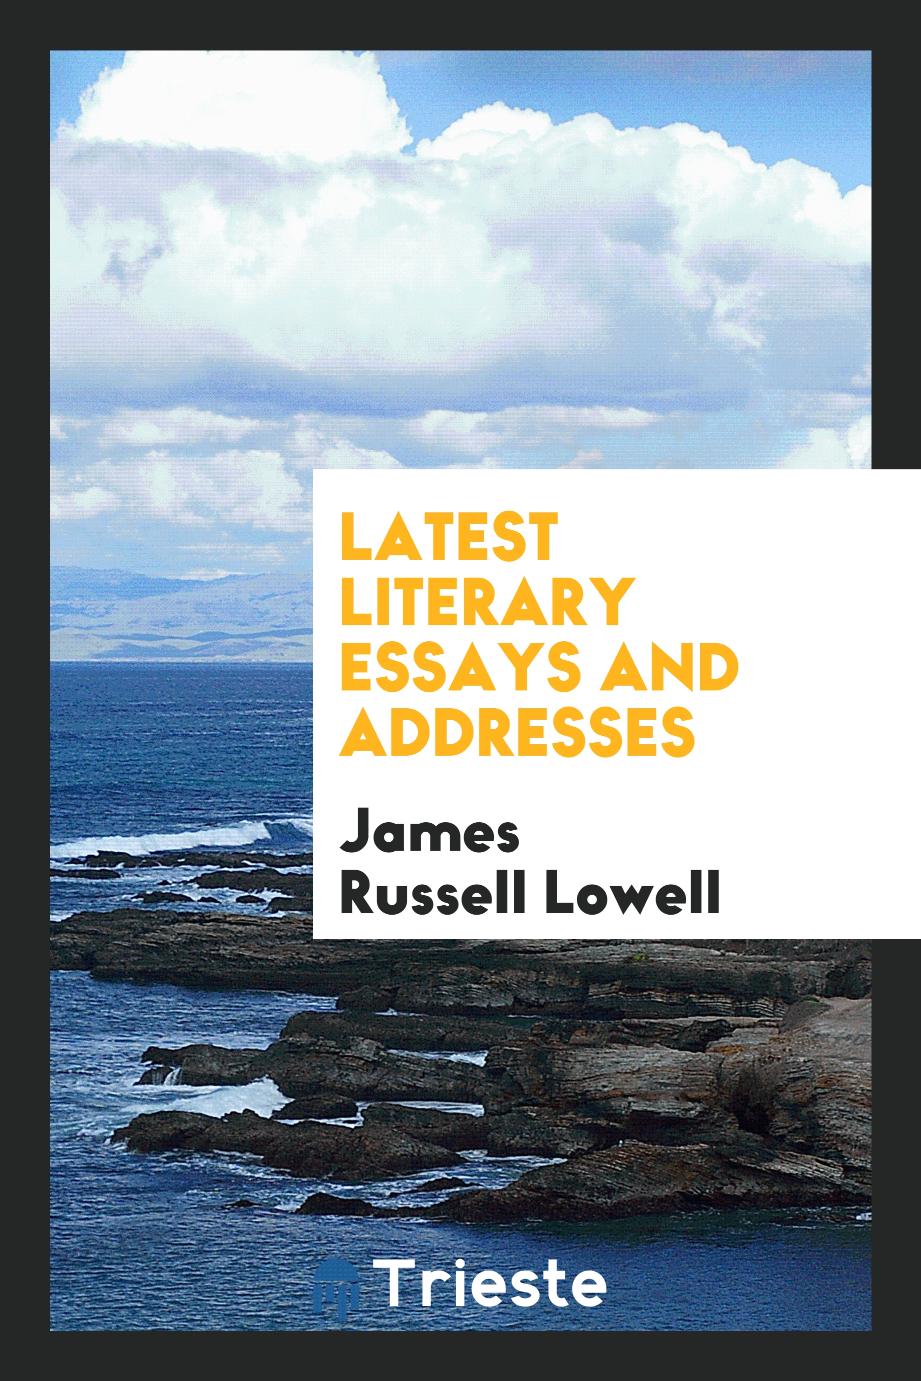 Latest literary essays and addresses